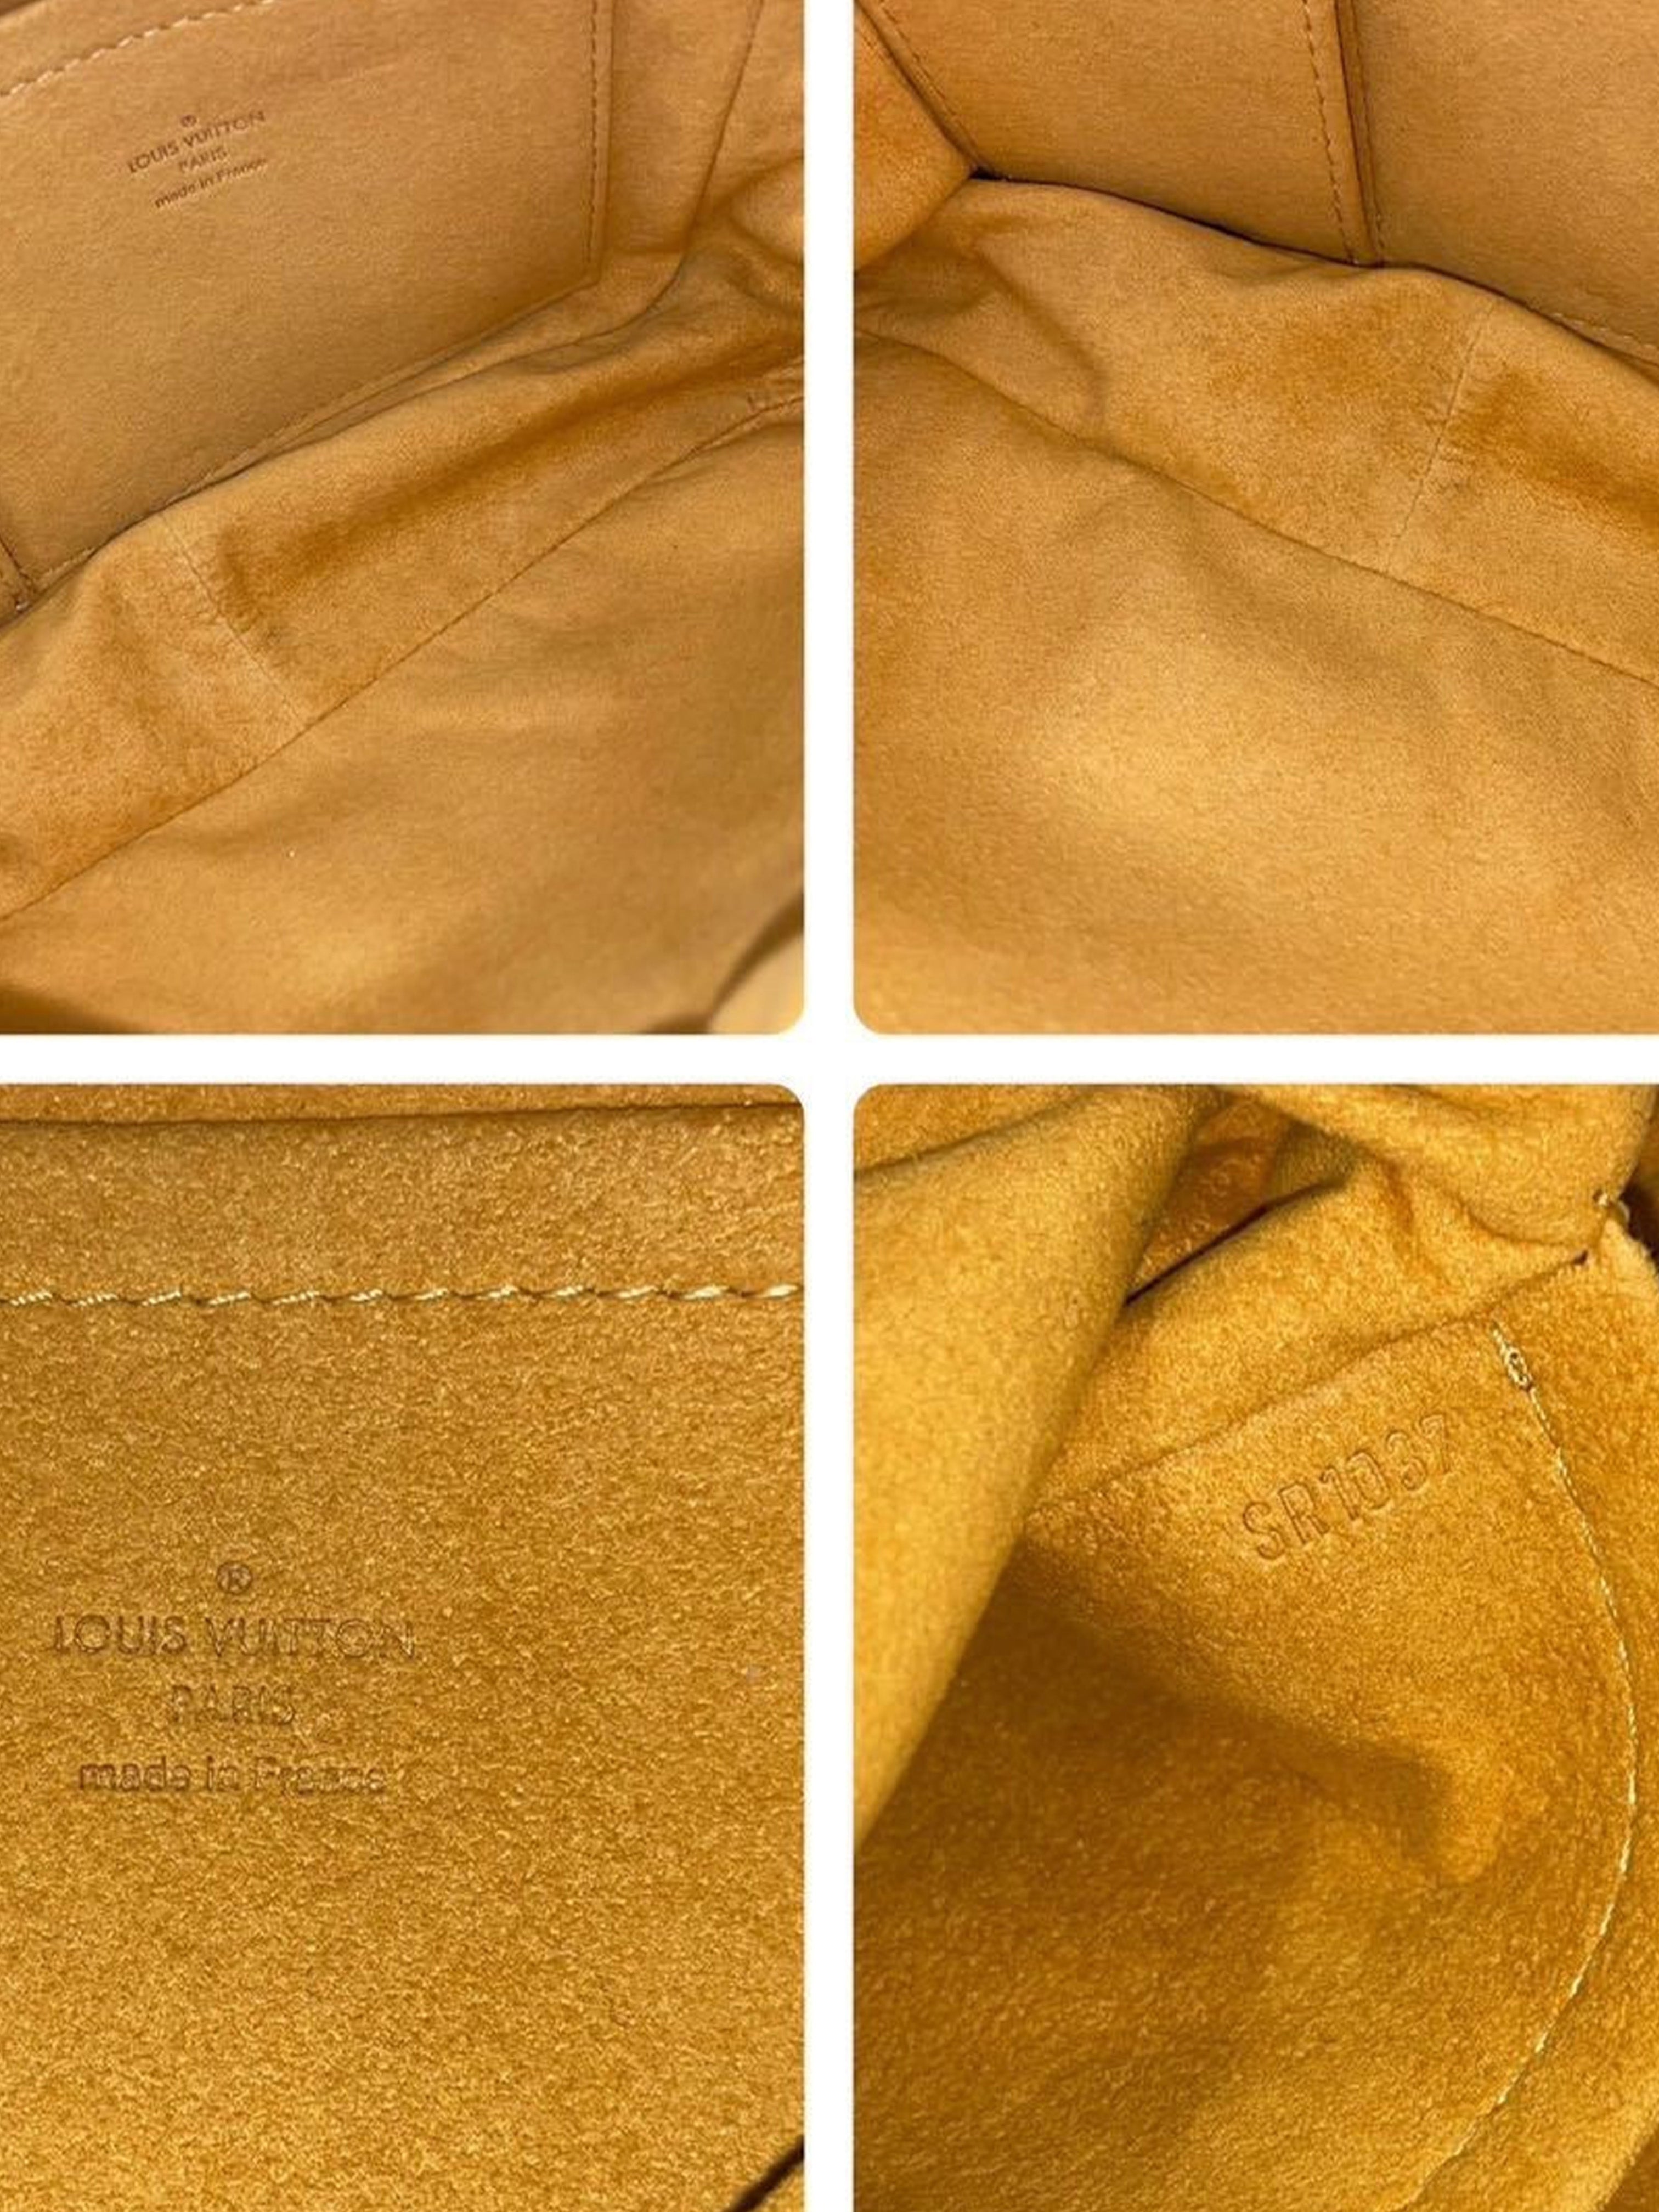 Louis Vuitton Blue Monogram Denim Bum Bag Gold Hardware, 2007 Available For  Immediate Sale At Sotheby's